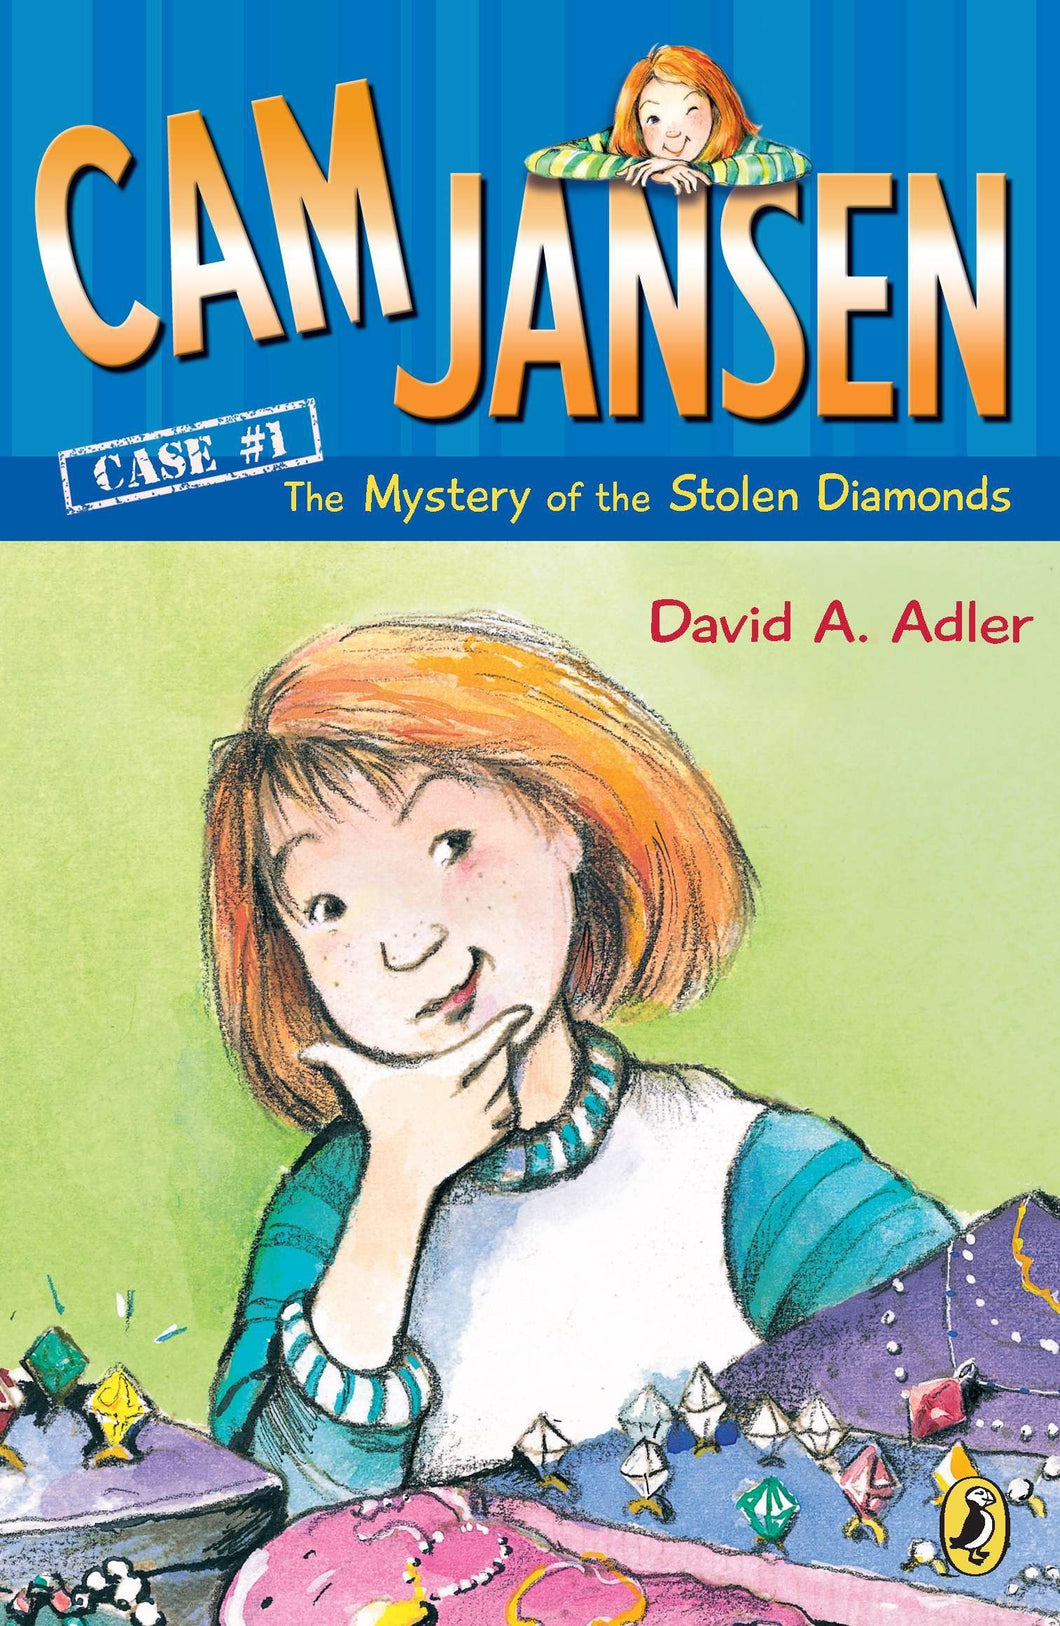 Cam Jansen #1: The Mystery of the Stolen Diamonds